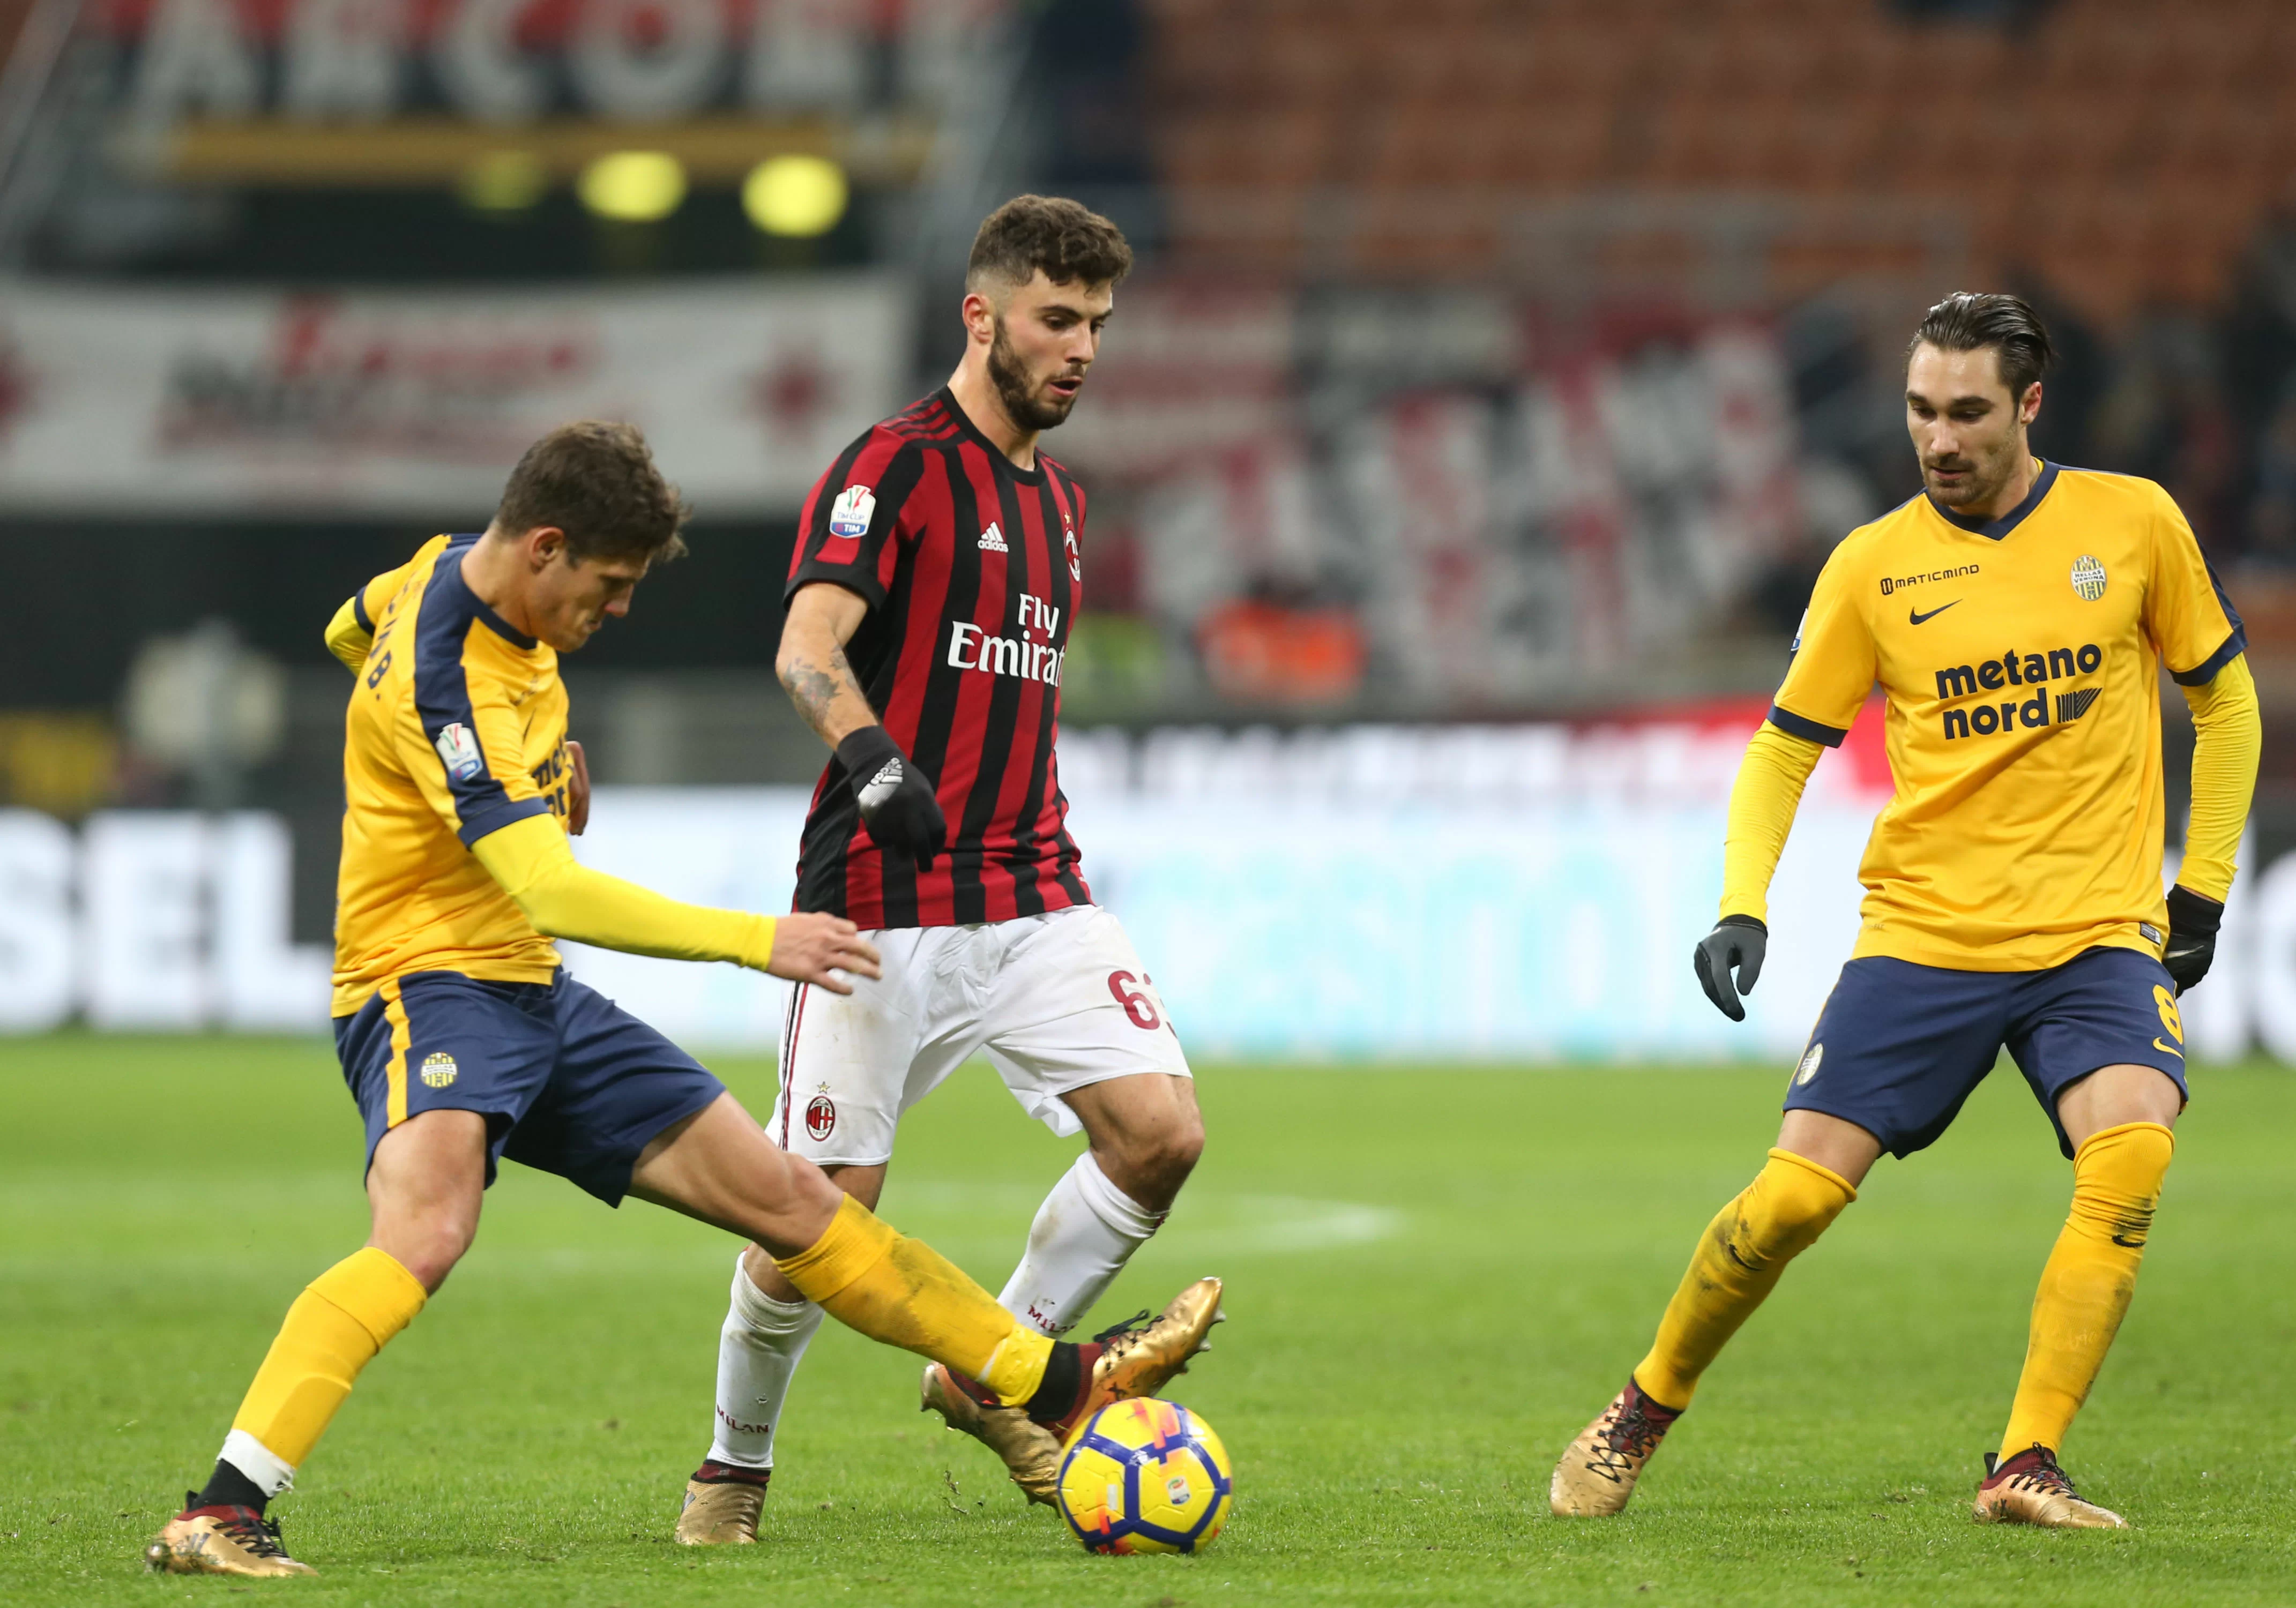 Verona-Milan: le statistiche del match del Bentegodi condannano i rossoneri